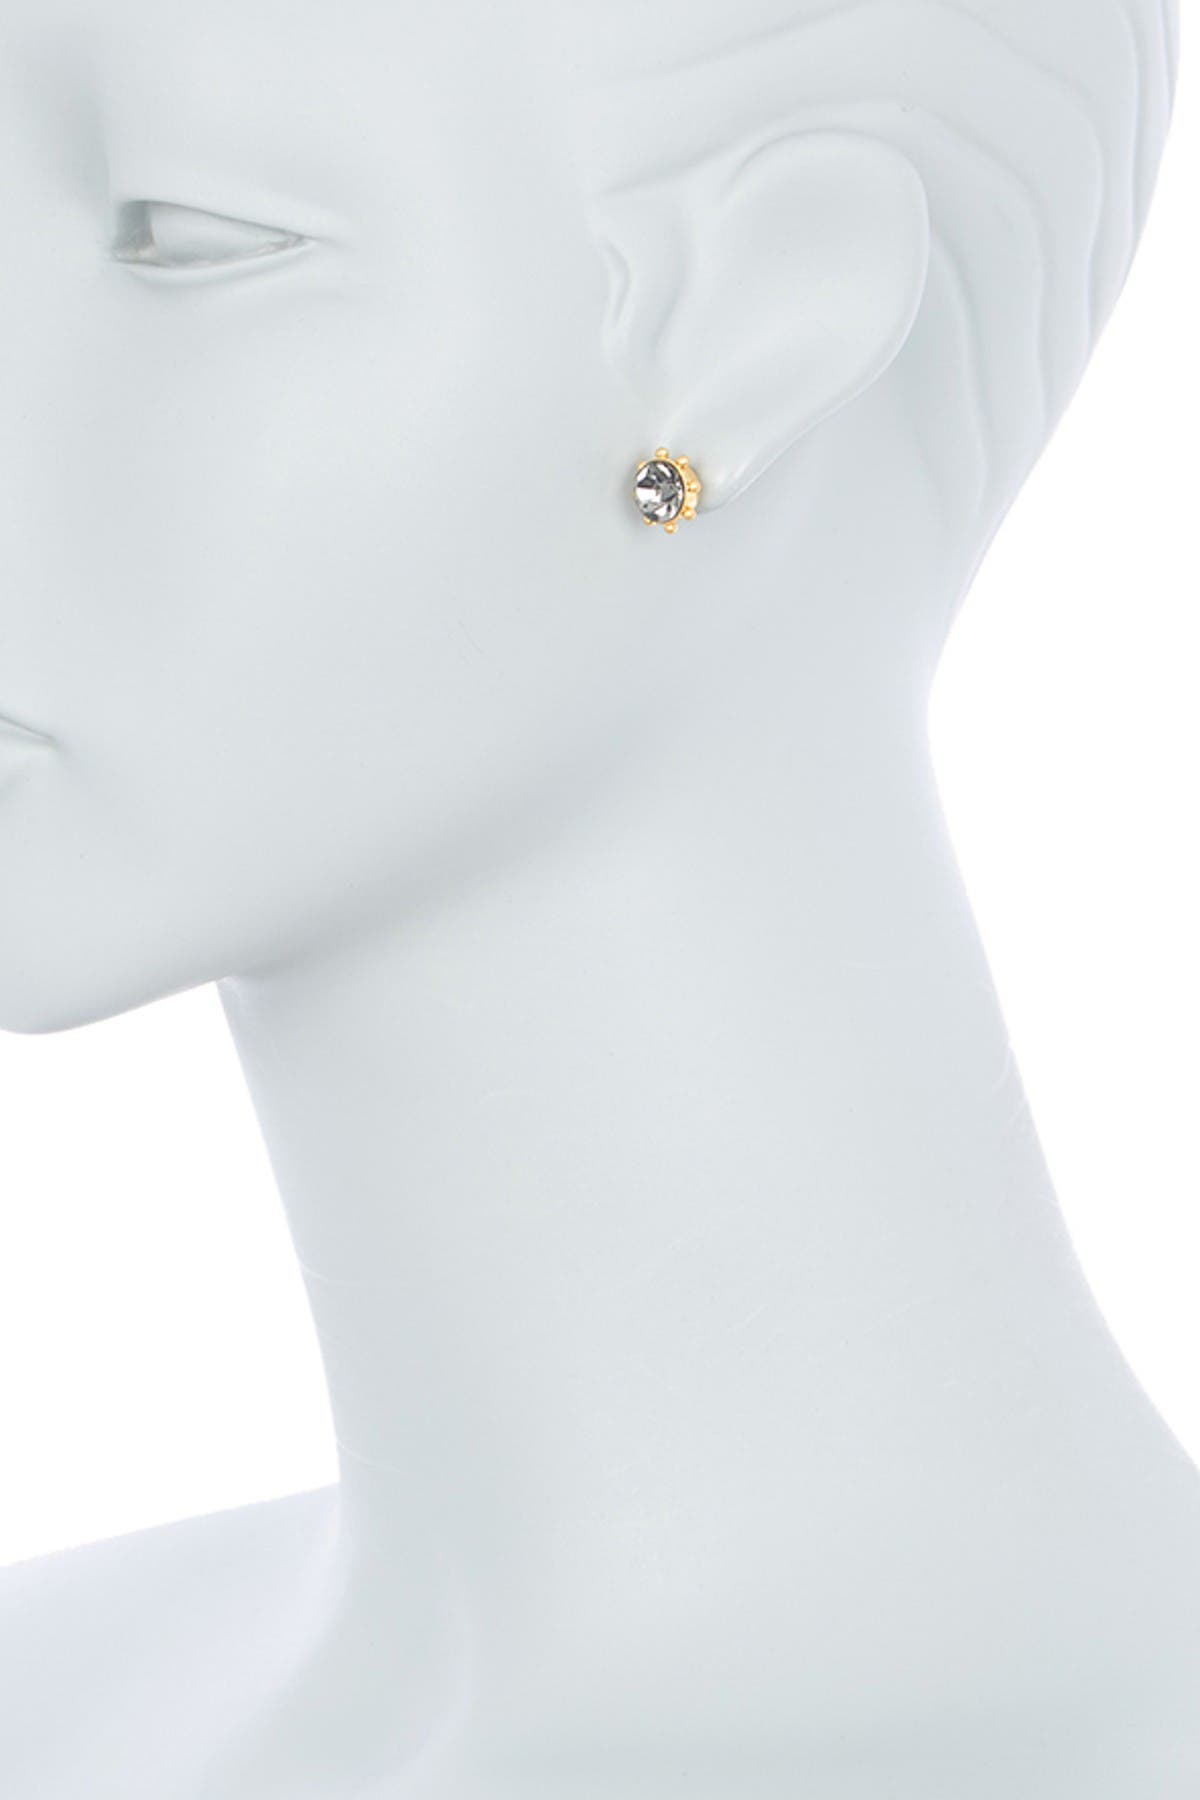 Kate Spade Gold-tone Bezel Set Crystal Stud Earrings In Charcoal4